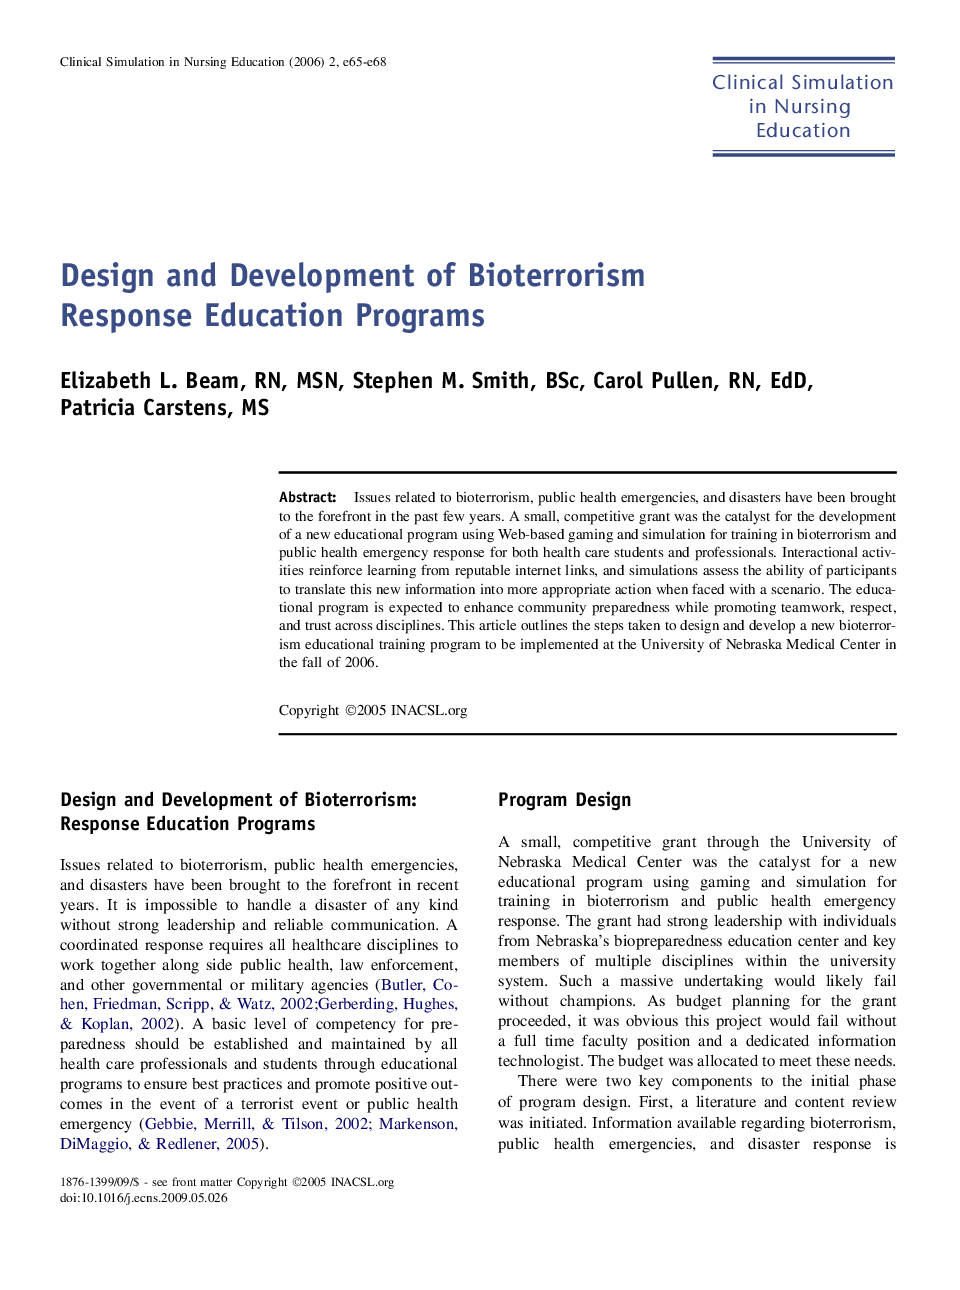 Design and Development of Bioterrorism Response Education Programs